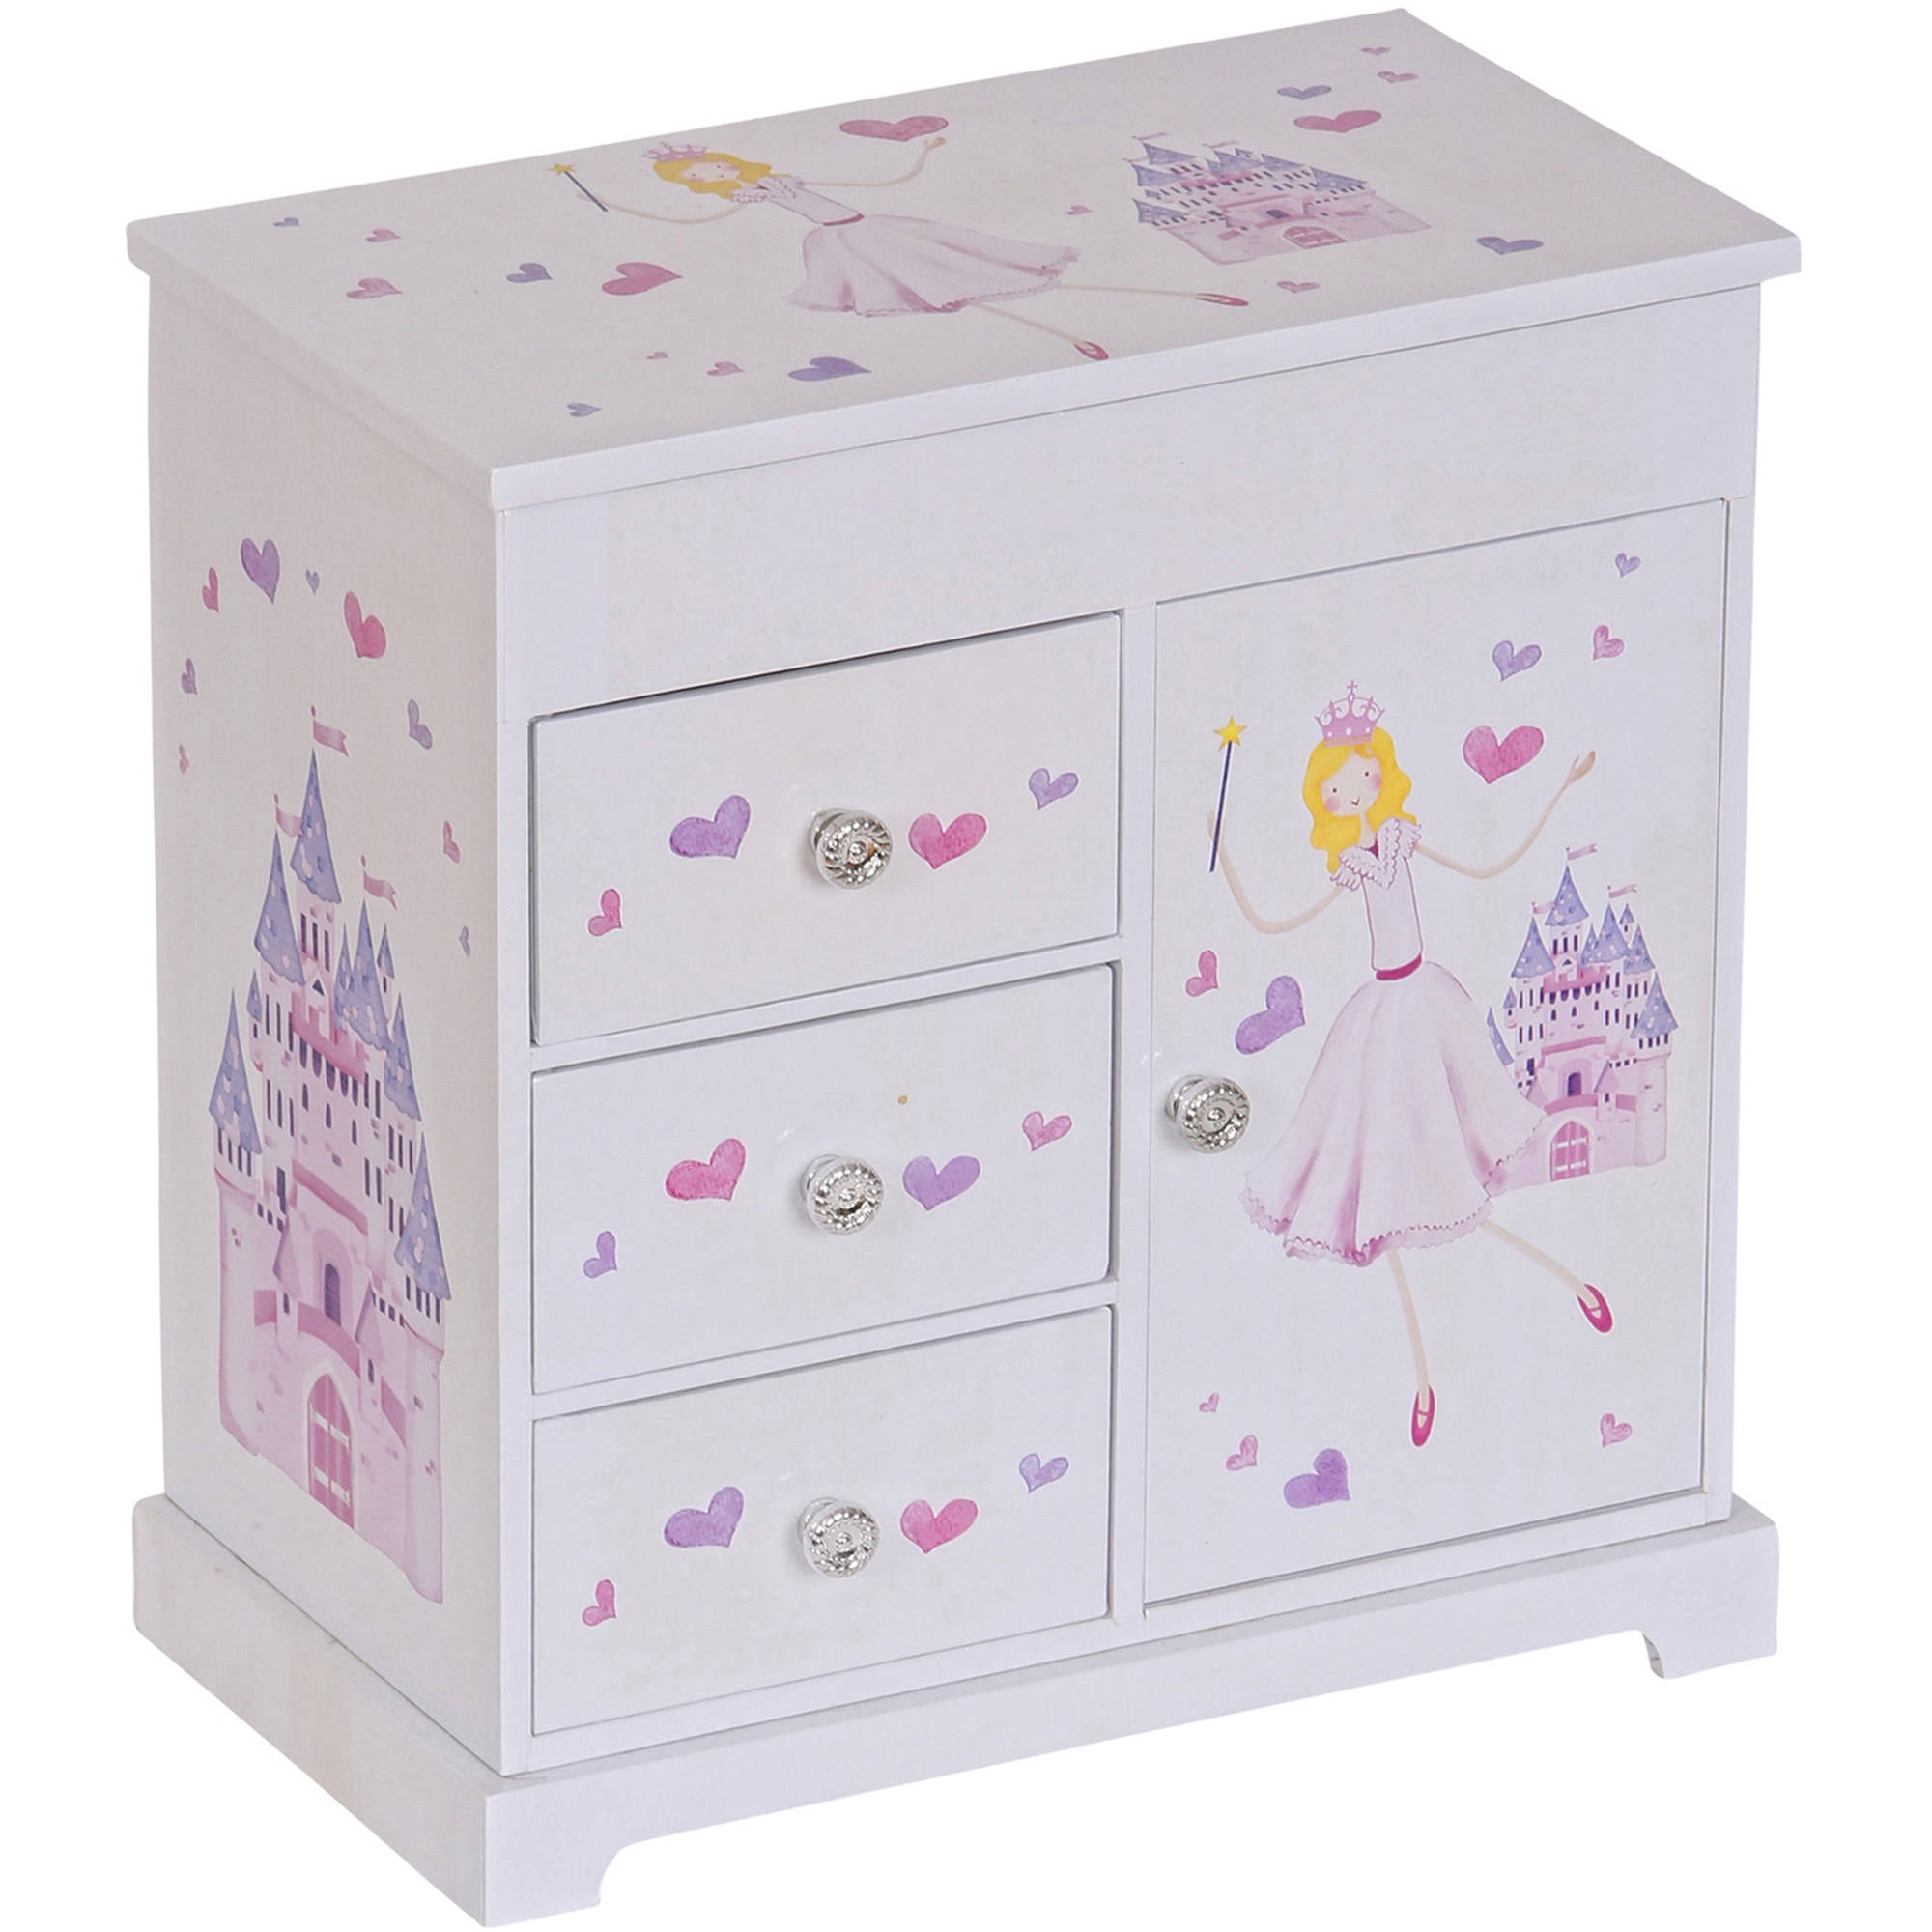 Melody Pink Multi-drawer Desktop Storage Box Wooden Cabine Cute Girl Xmas Gifts 